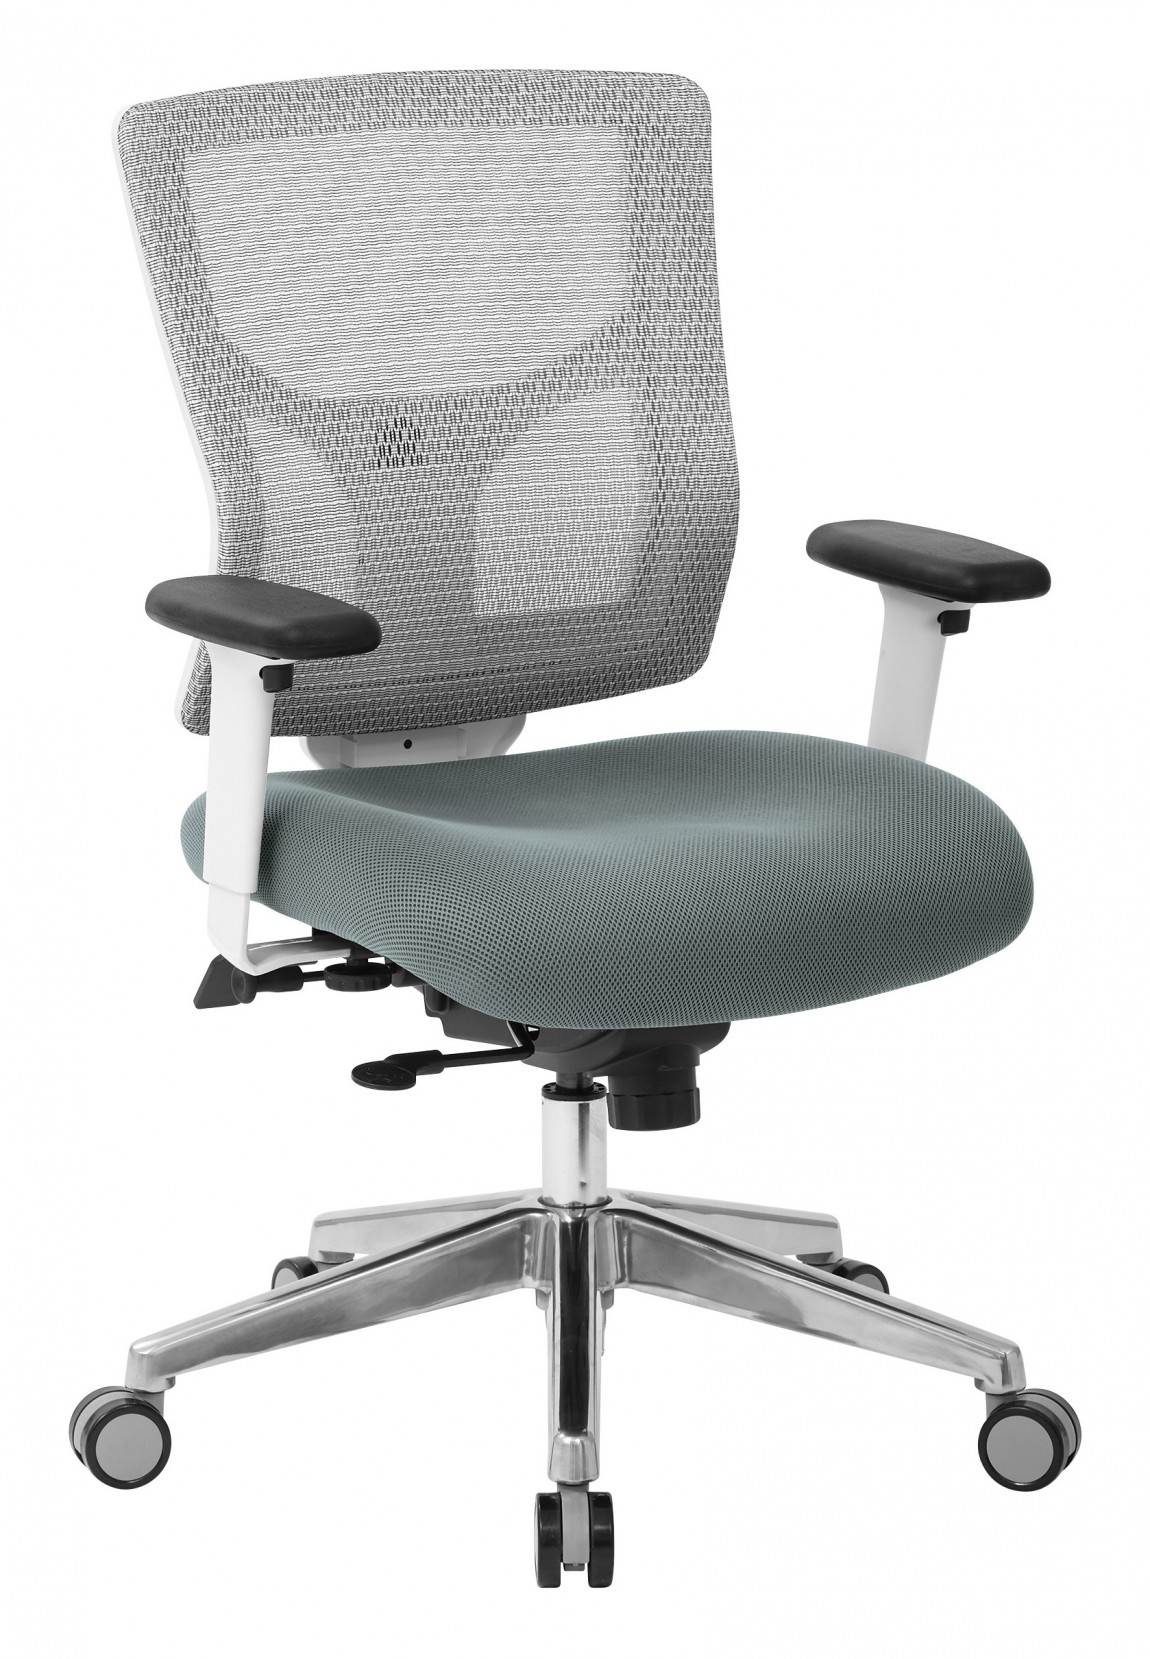 Mid Back Ergonomic Office Chair